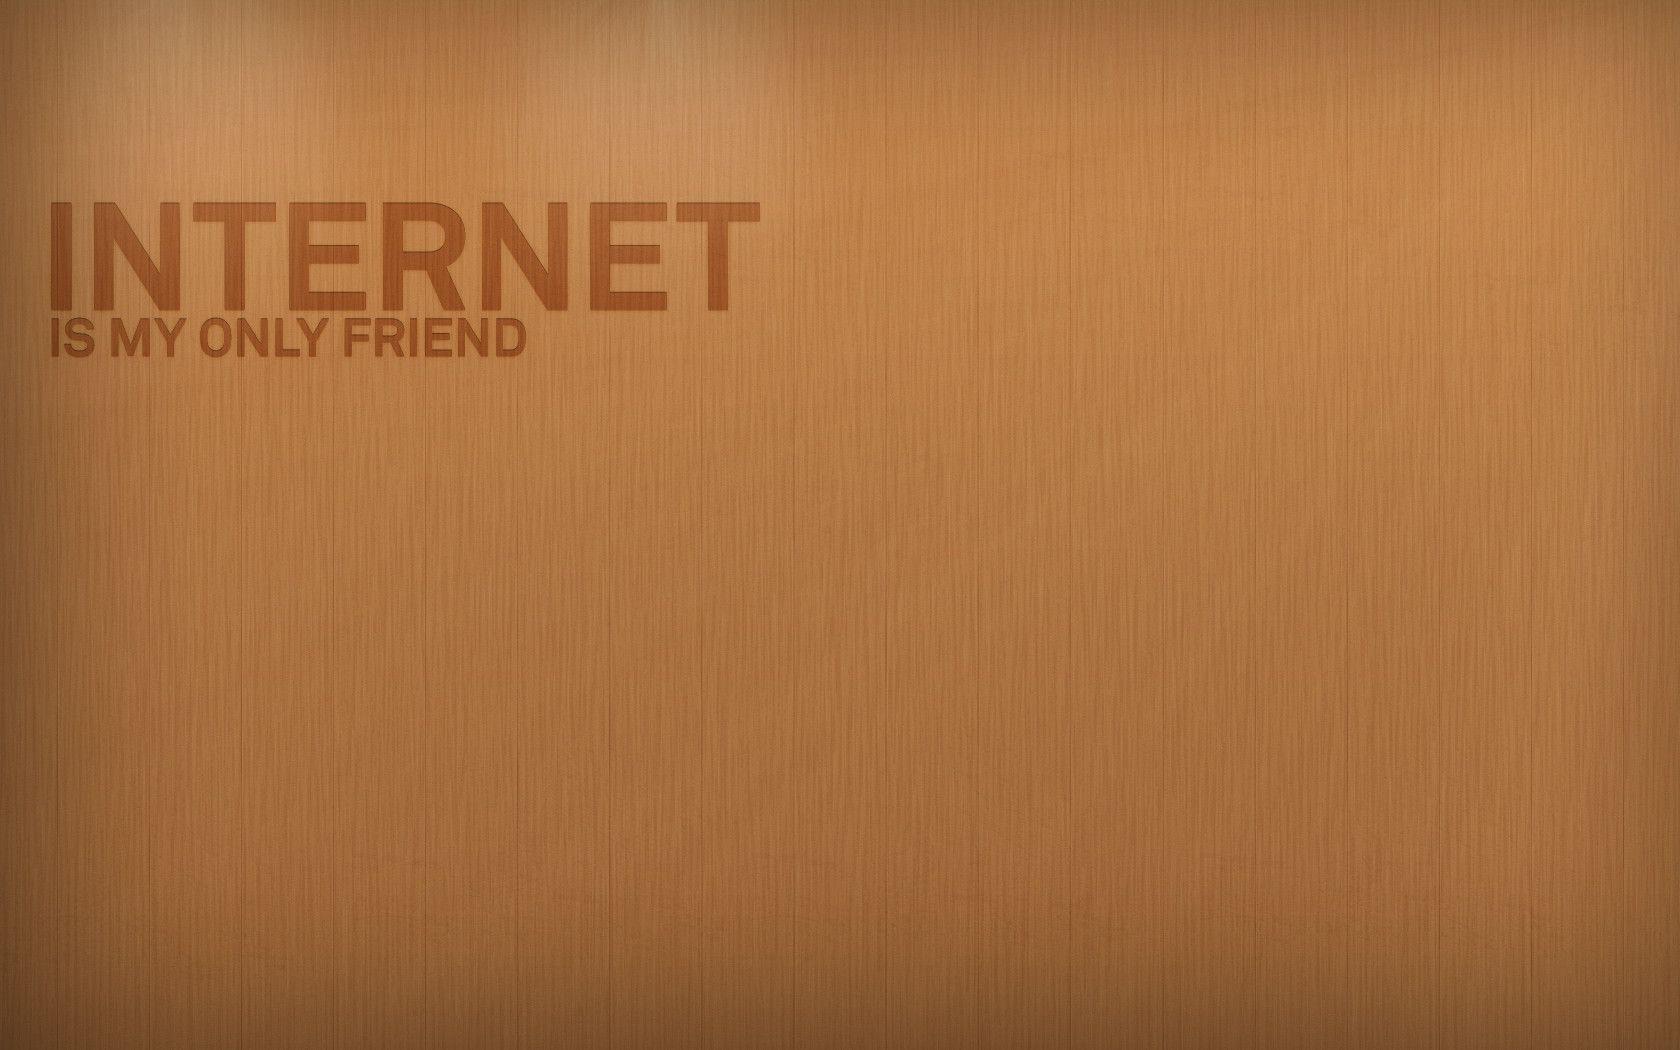 Free Internet Is My Only Friend Wallpaper, Free Internet Is My